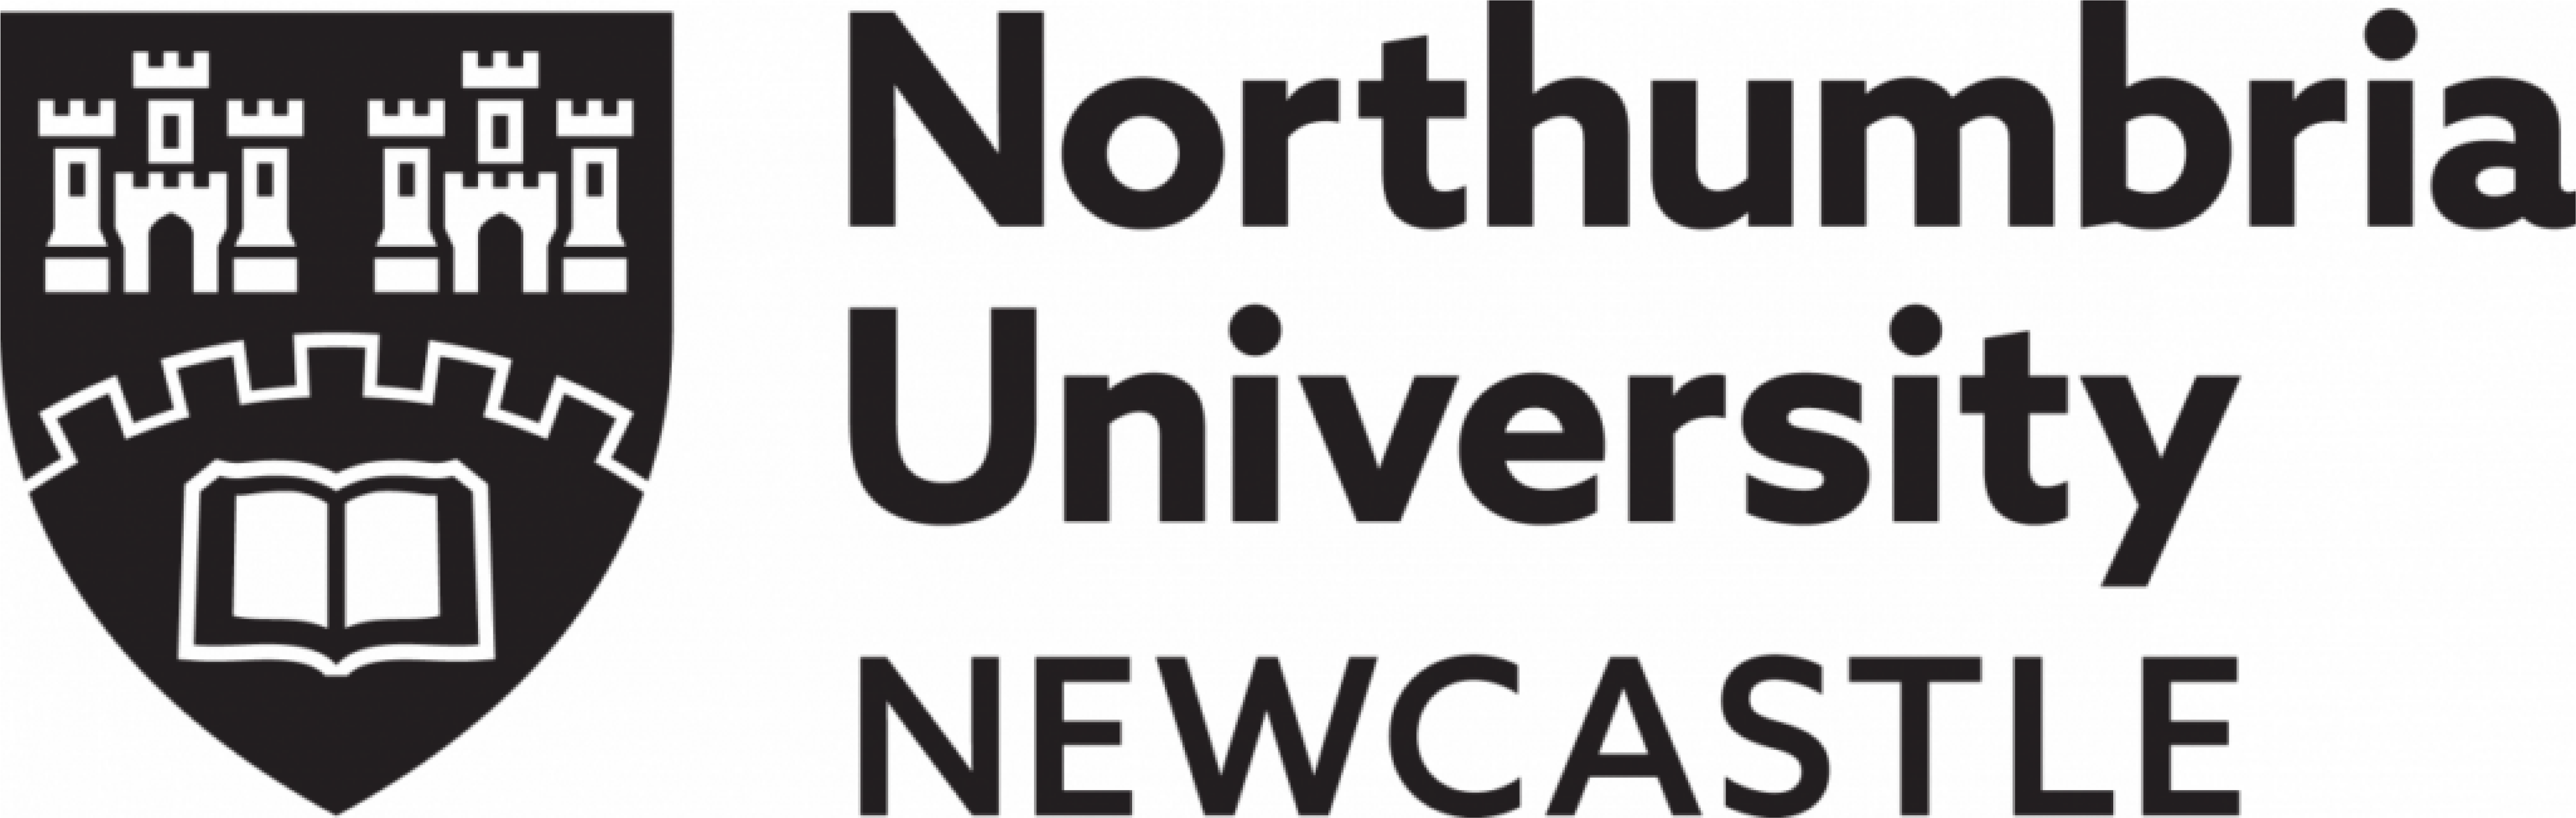 Northumbria-black-1024x325 1